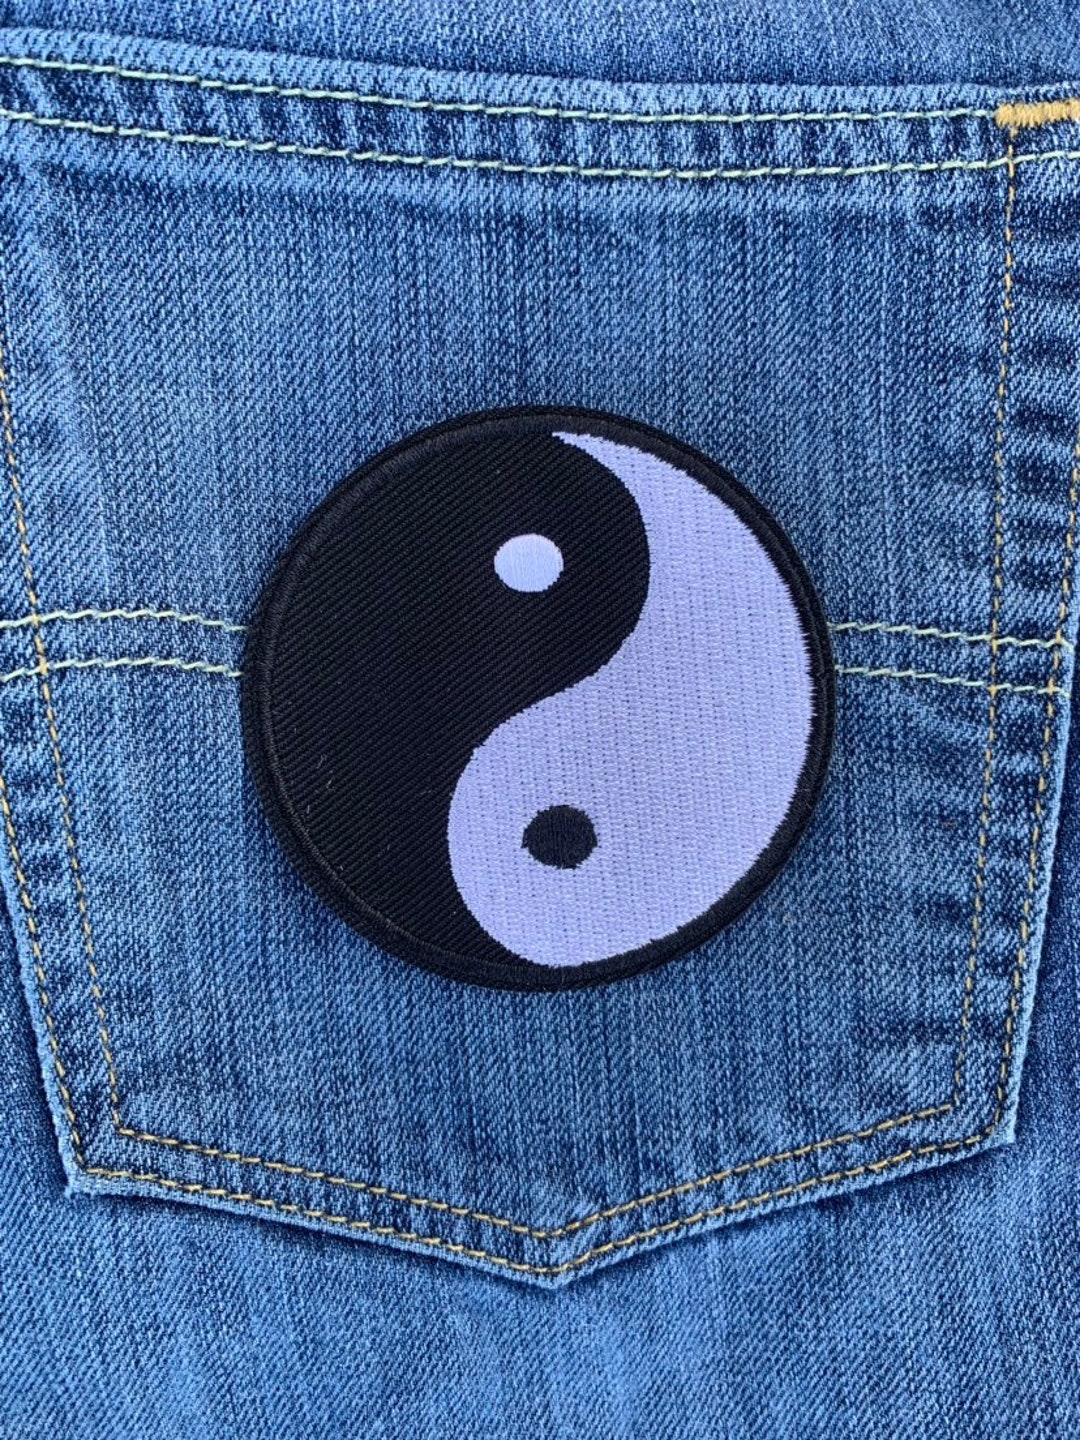 Yin Yang Iron on Patch - Etsy